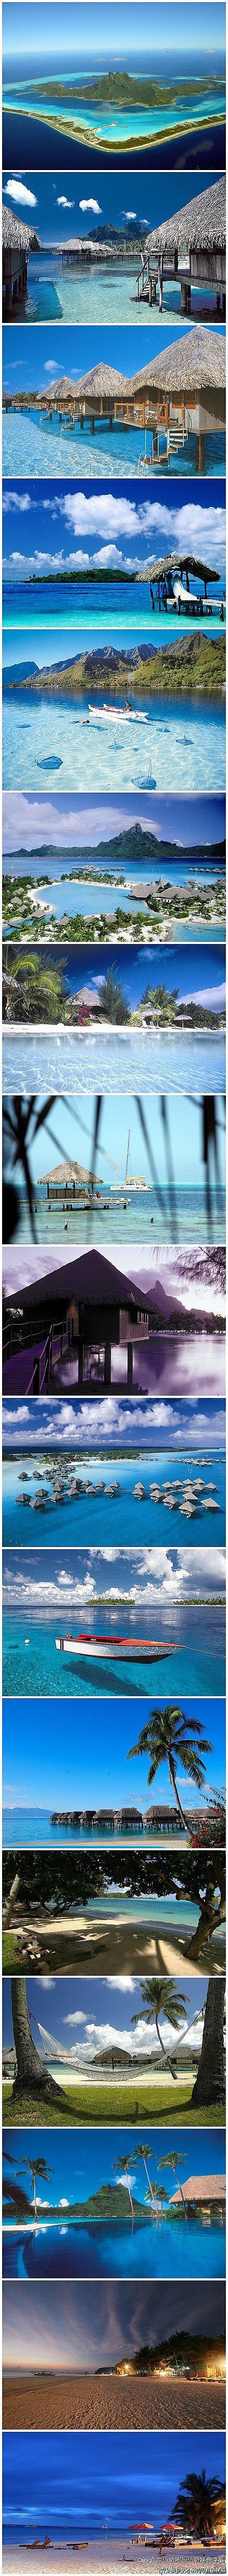 Tahitis, Bora Bora Didnt go